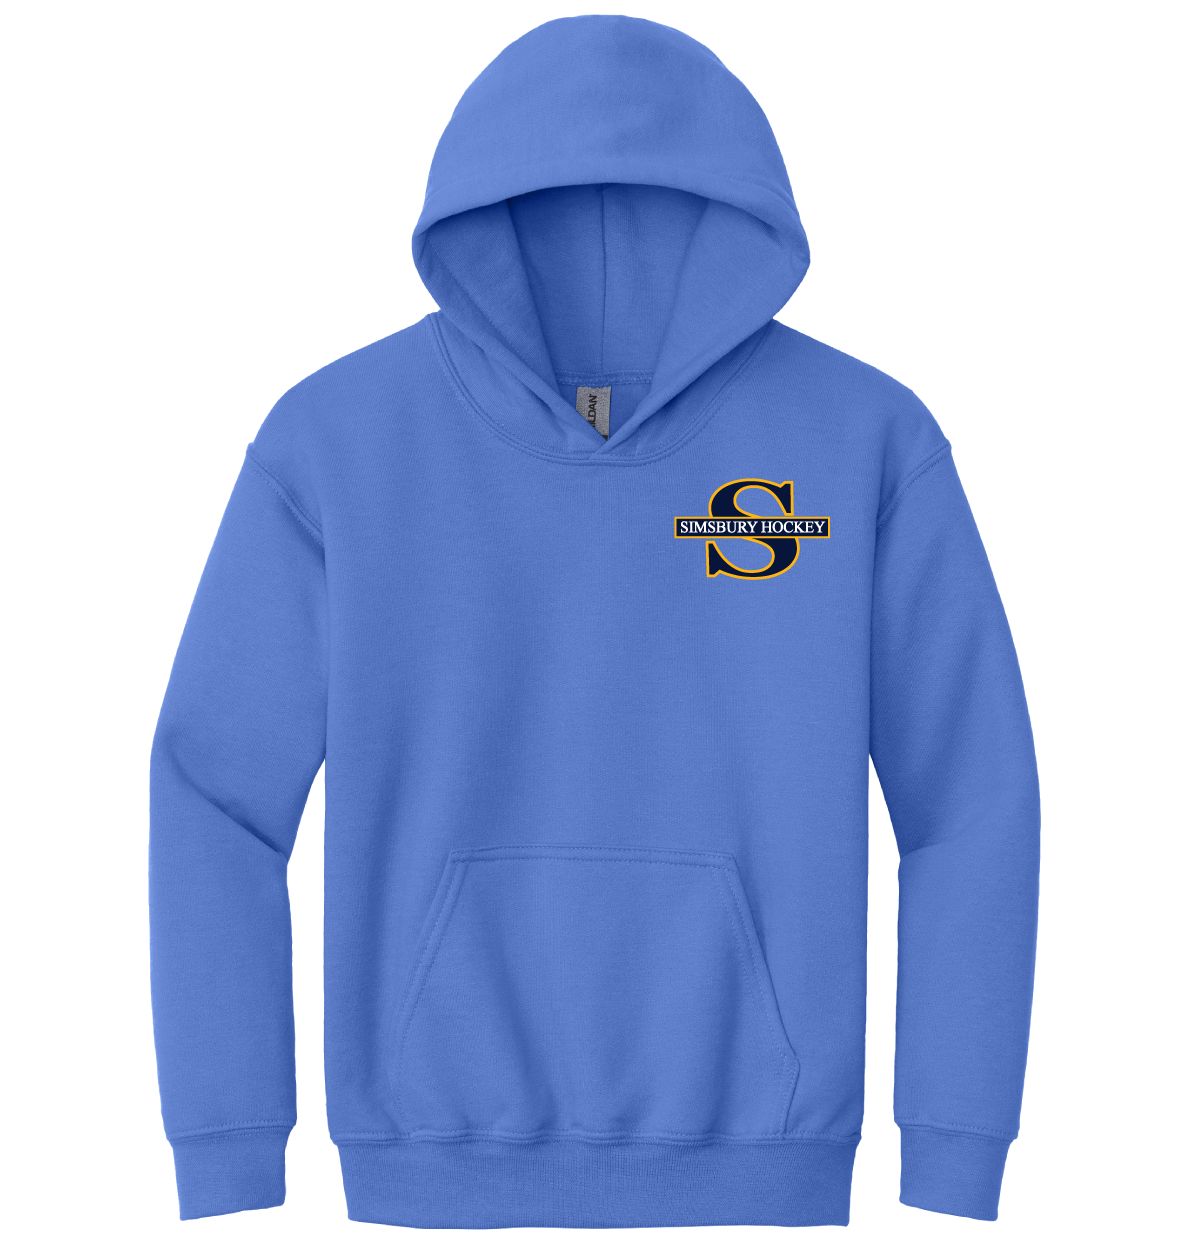 Hooded Sweatshirt: Simsbury Youth Hockey  Left Chest Embroidered Logo